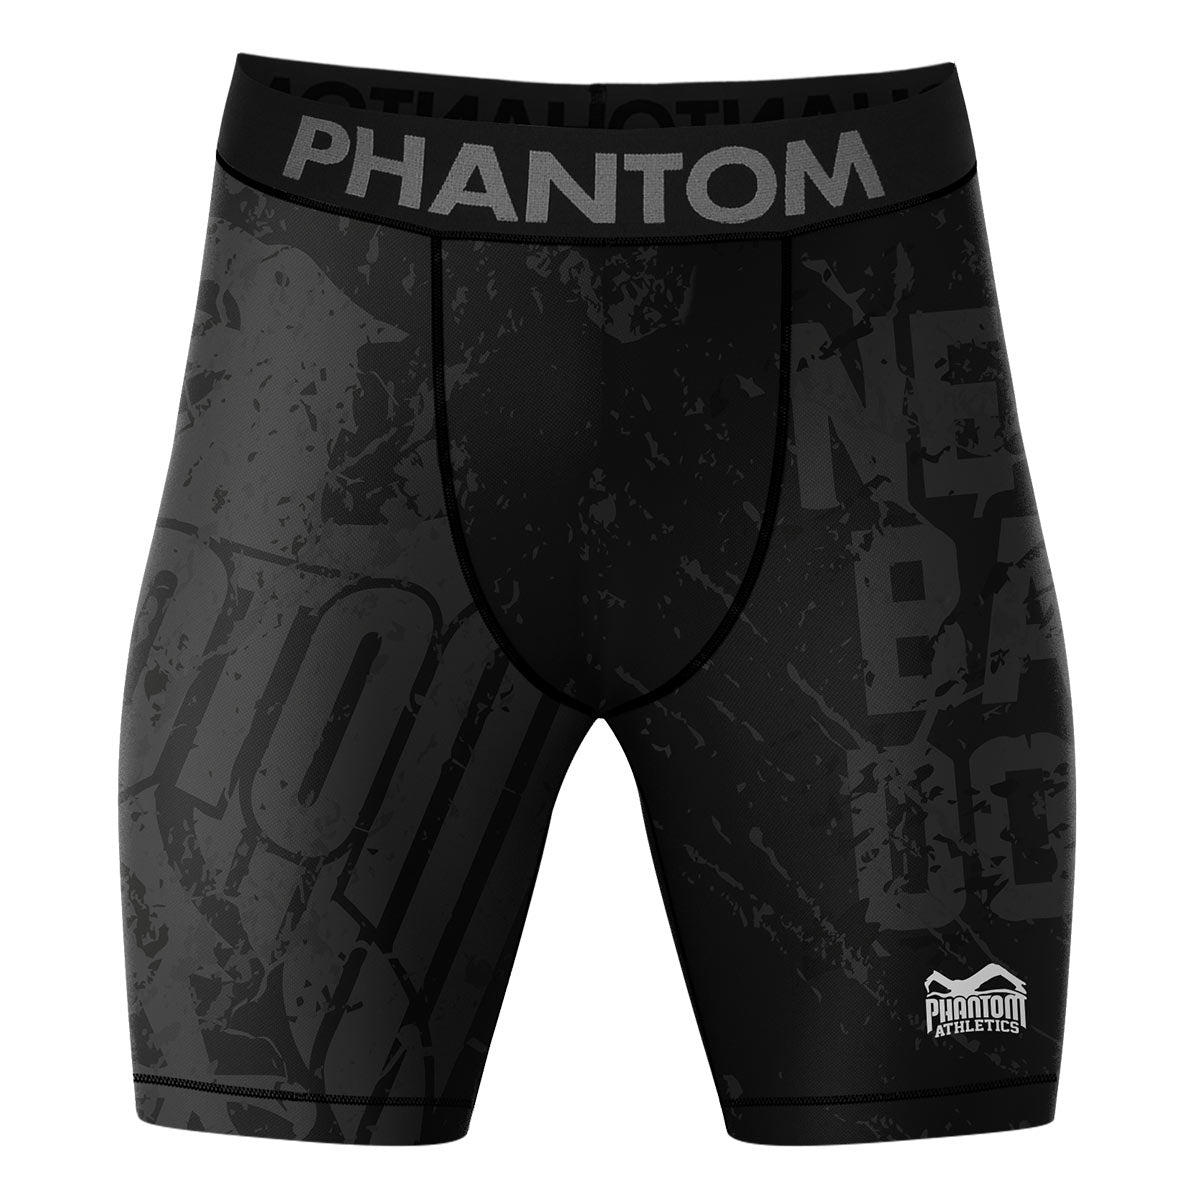 Phantom EVO compression fight shorts i Team Germany design. Med tysk ørn og "Never Back Down" bogstaver. Ideel til dine kampsportsgrene, såsom MMA, Muay Thai, brydning, BJJ eller kickboksning.